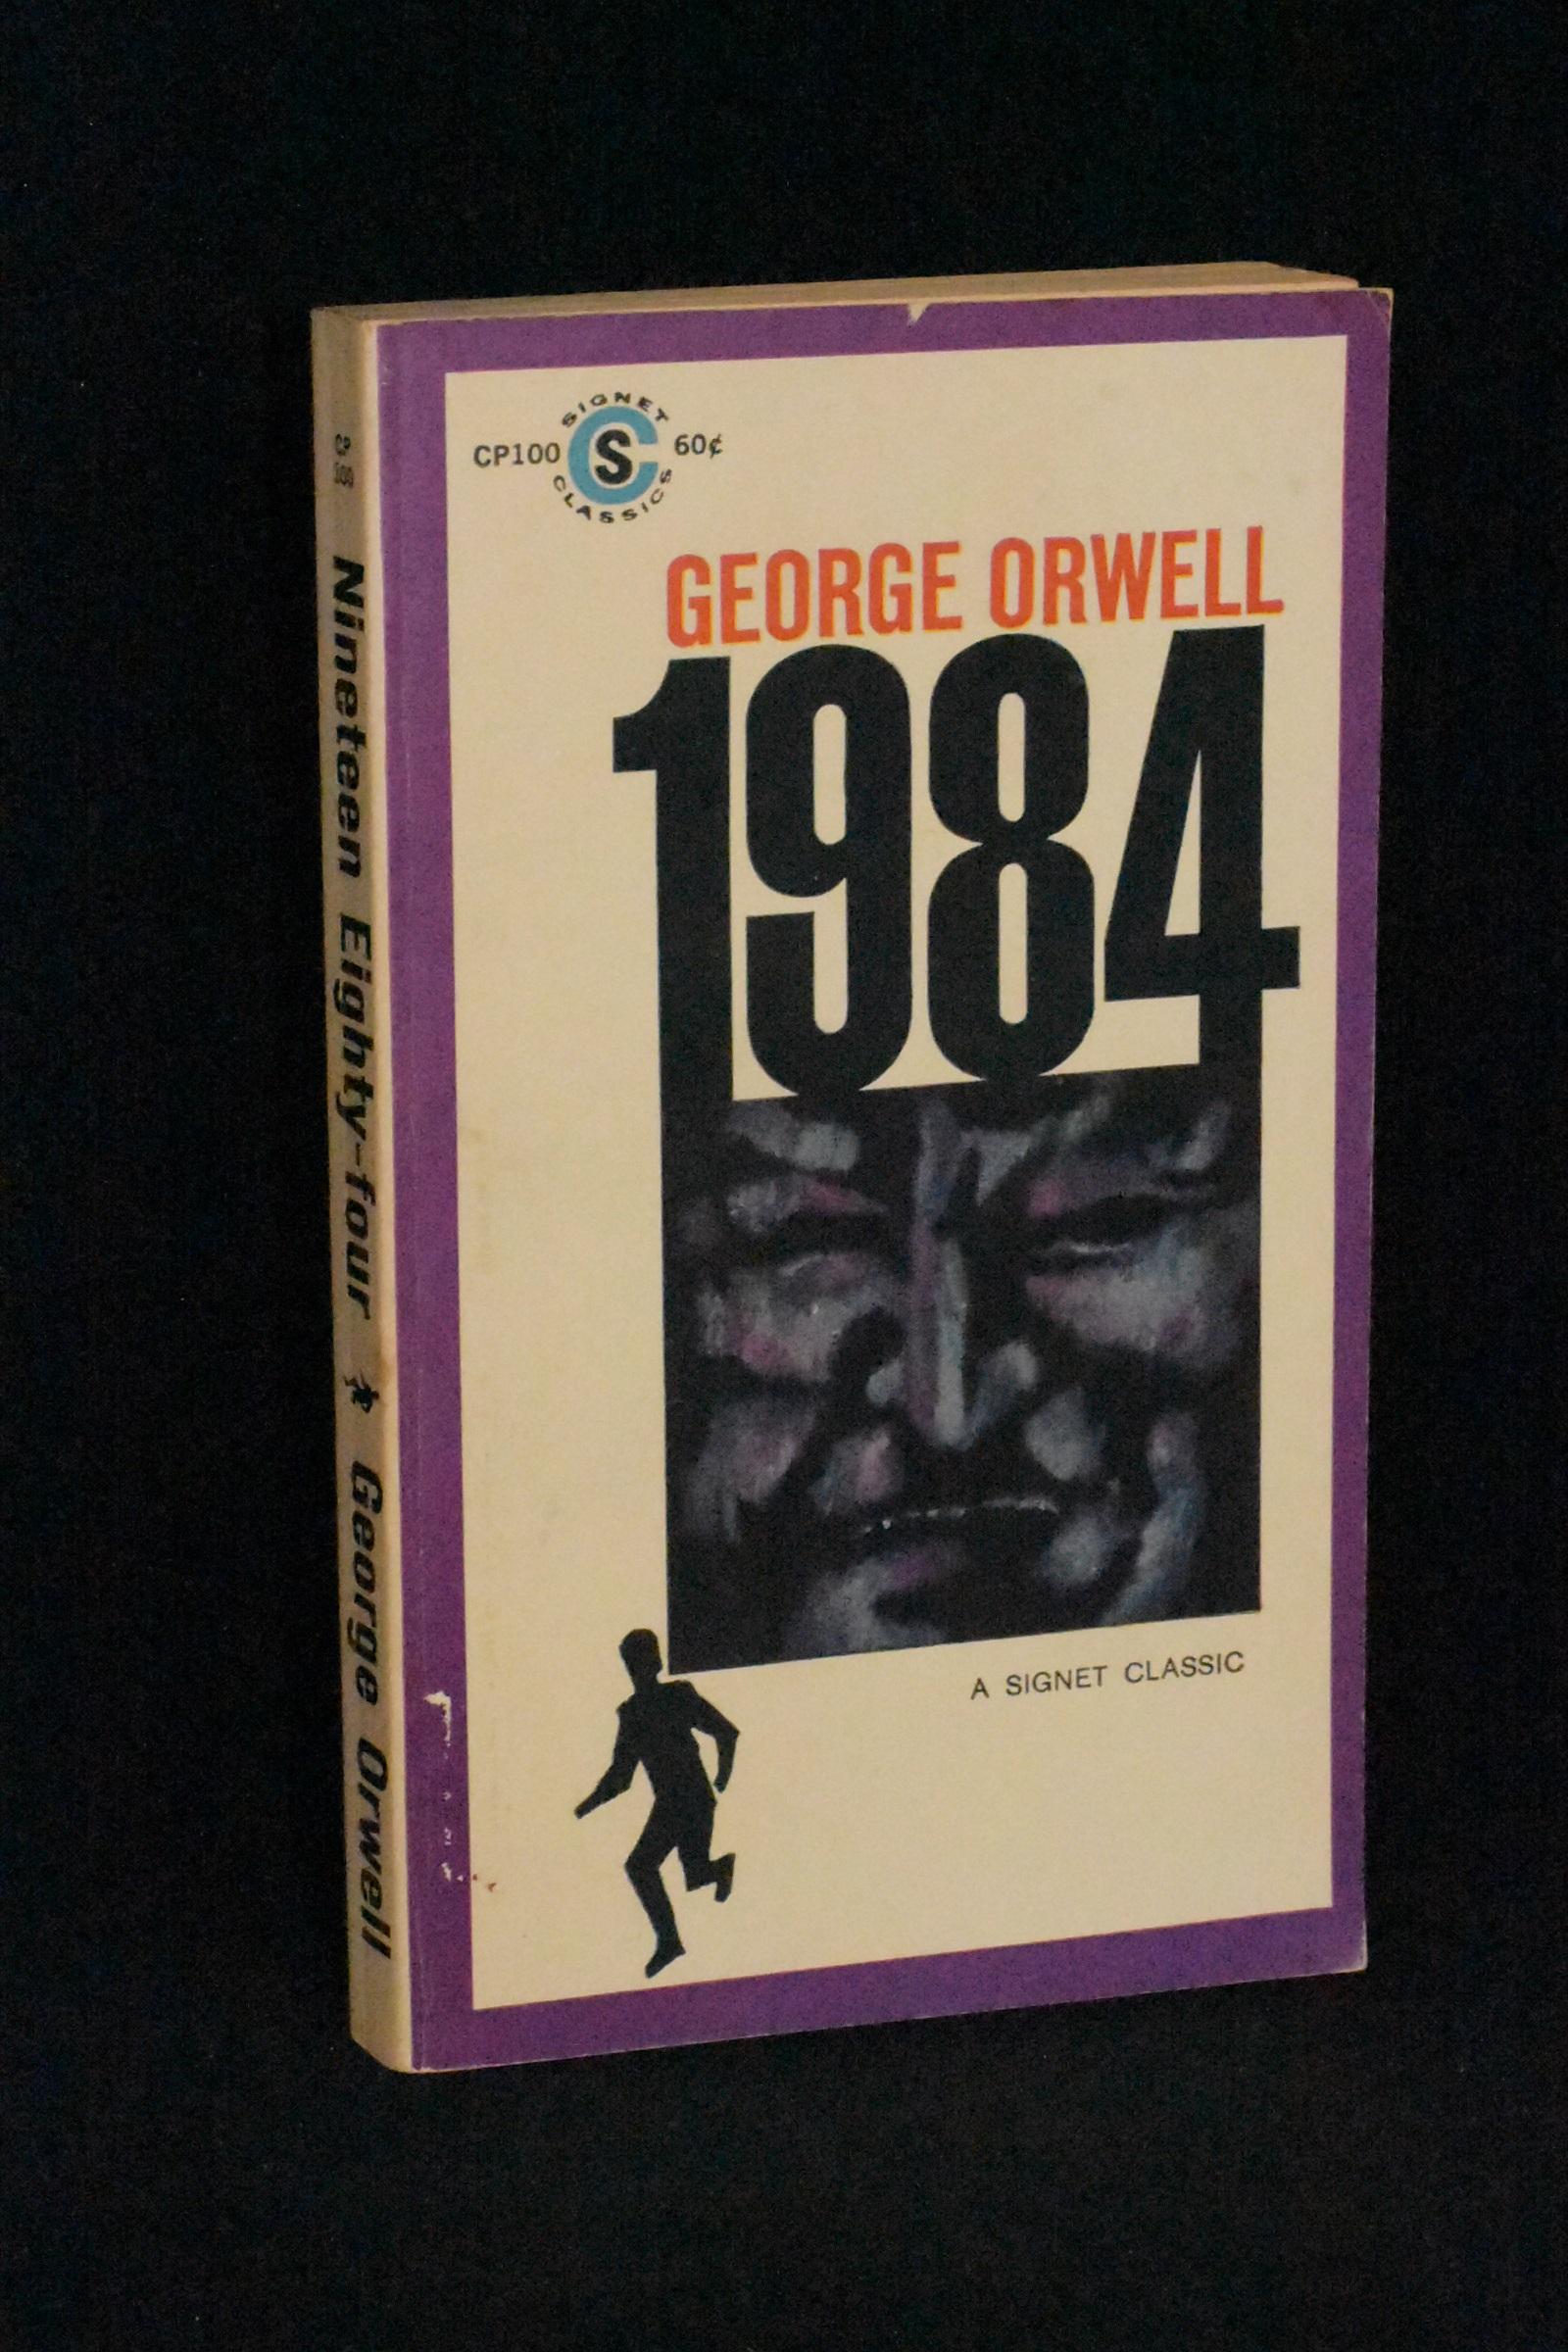 1984: New Classic Edition